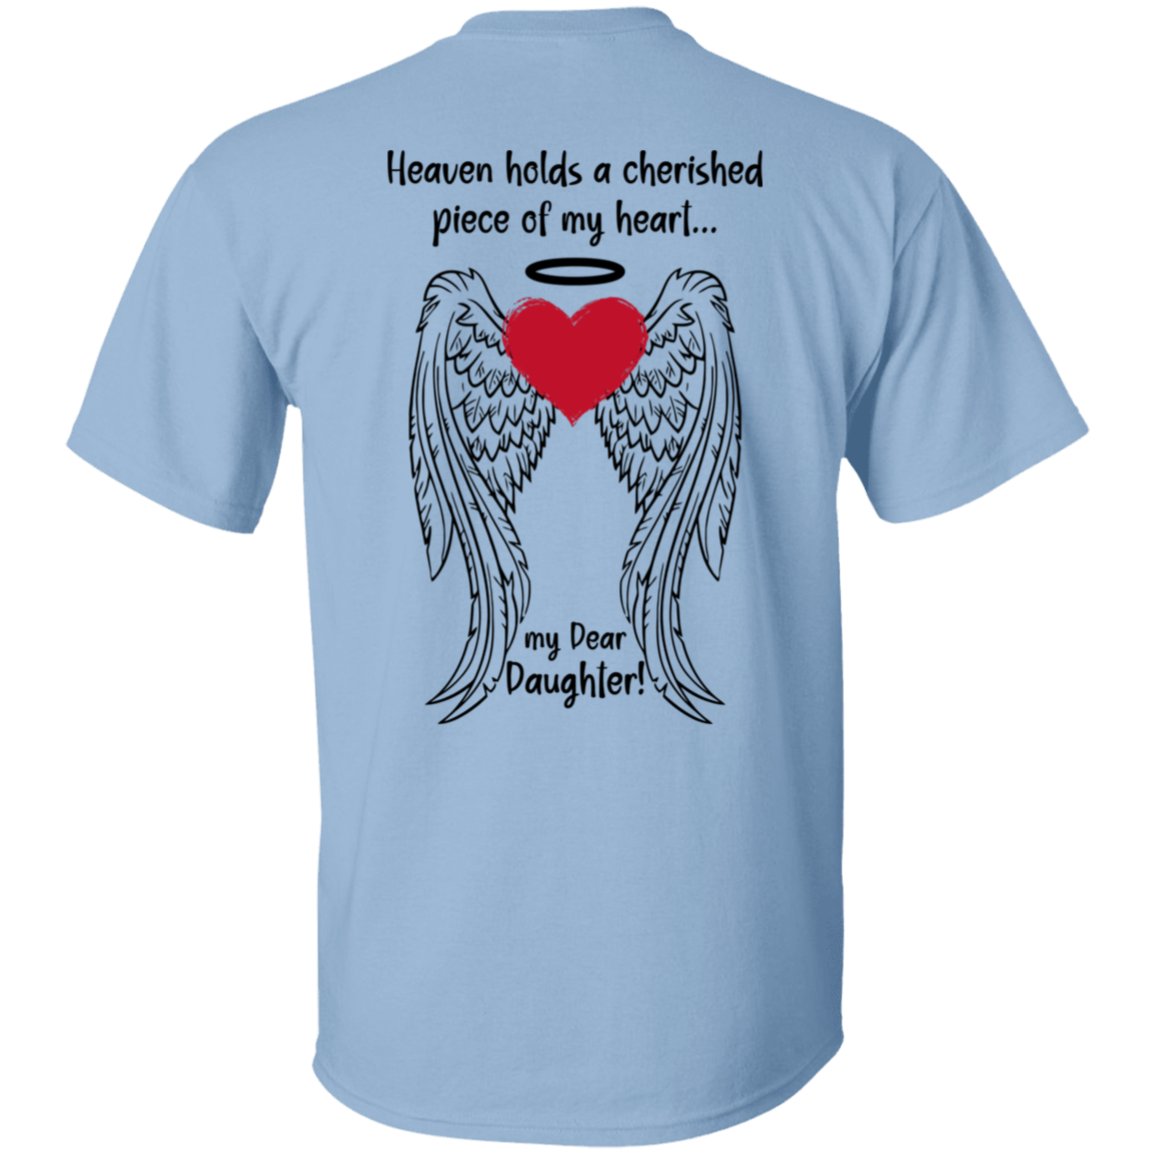 𝗗𝗔𝗨𝗚𝗛𝗧𝗘𝗥, HEAVENLY GUARDIAN - Unisex T-Shirt